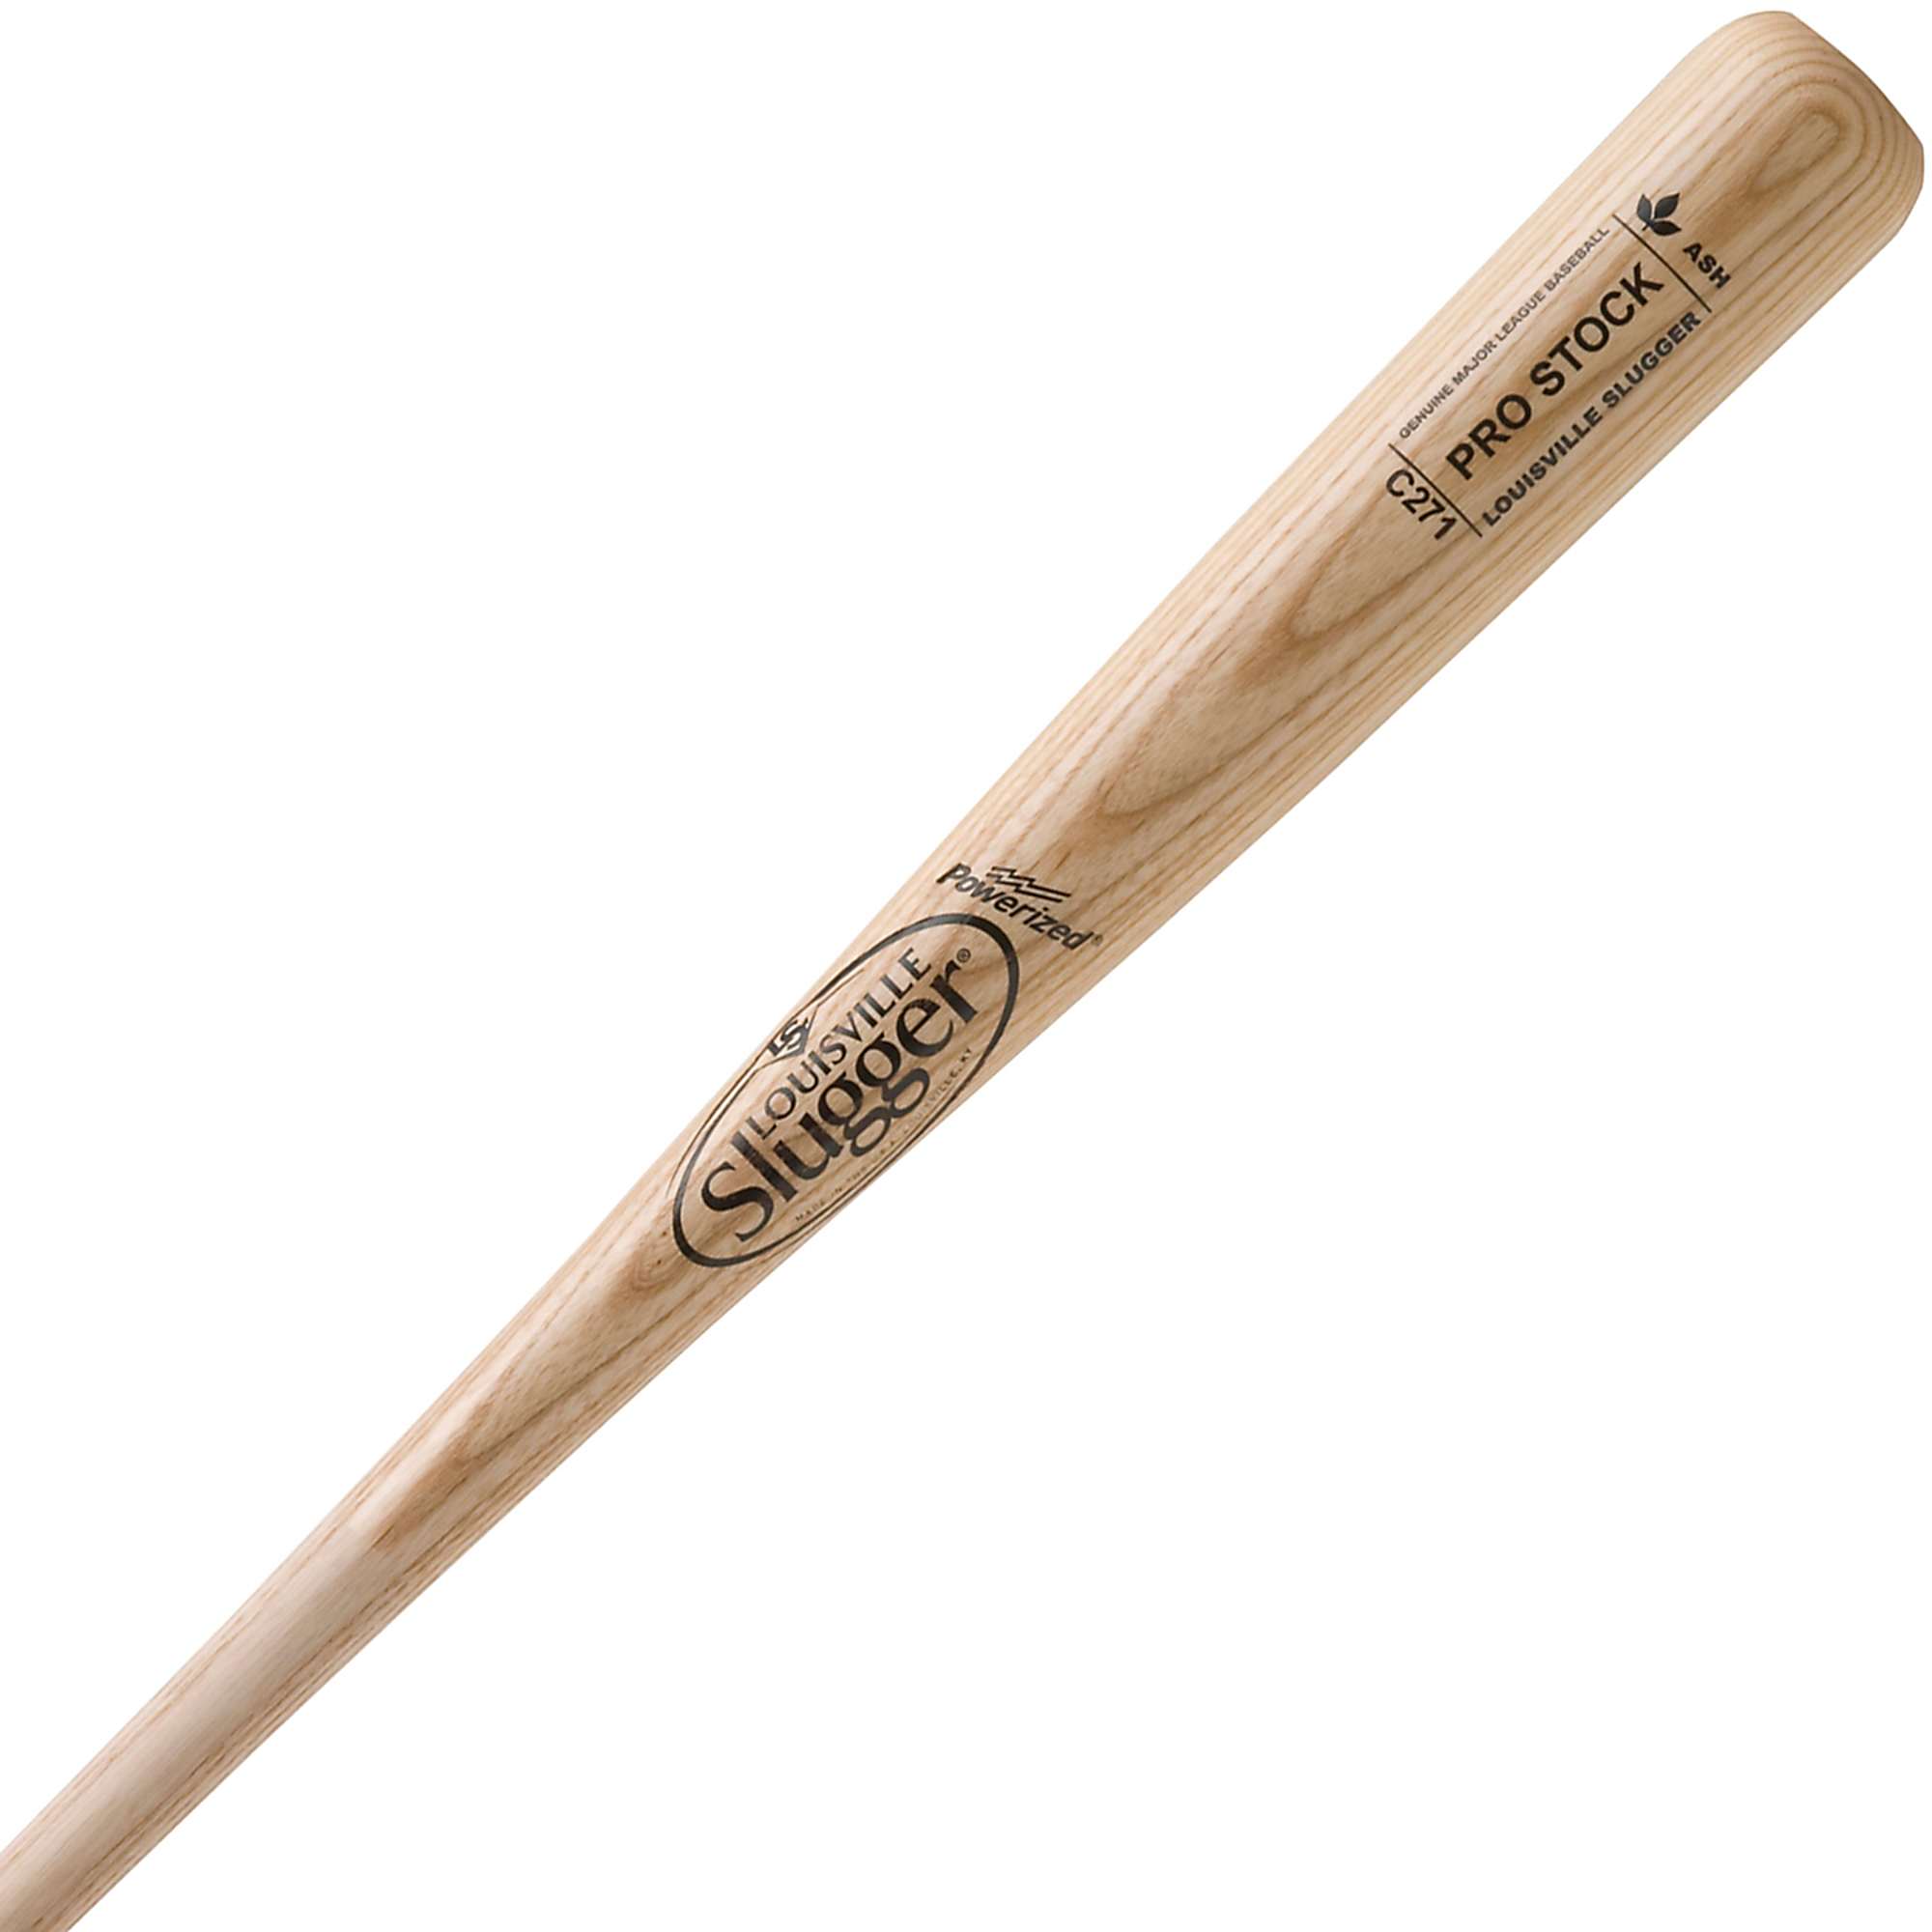 Louisville Slugger 2015 Pro Stock Ash Wood Baseball Bats | eBay